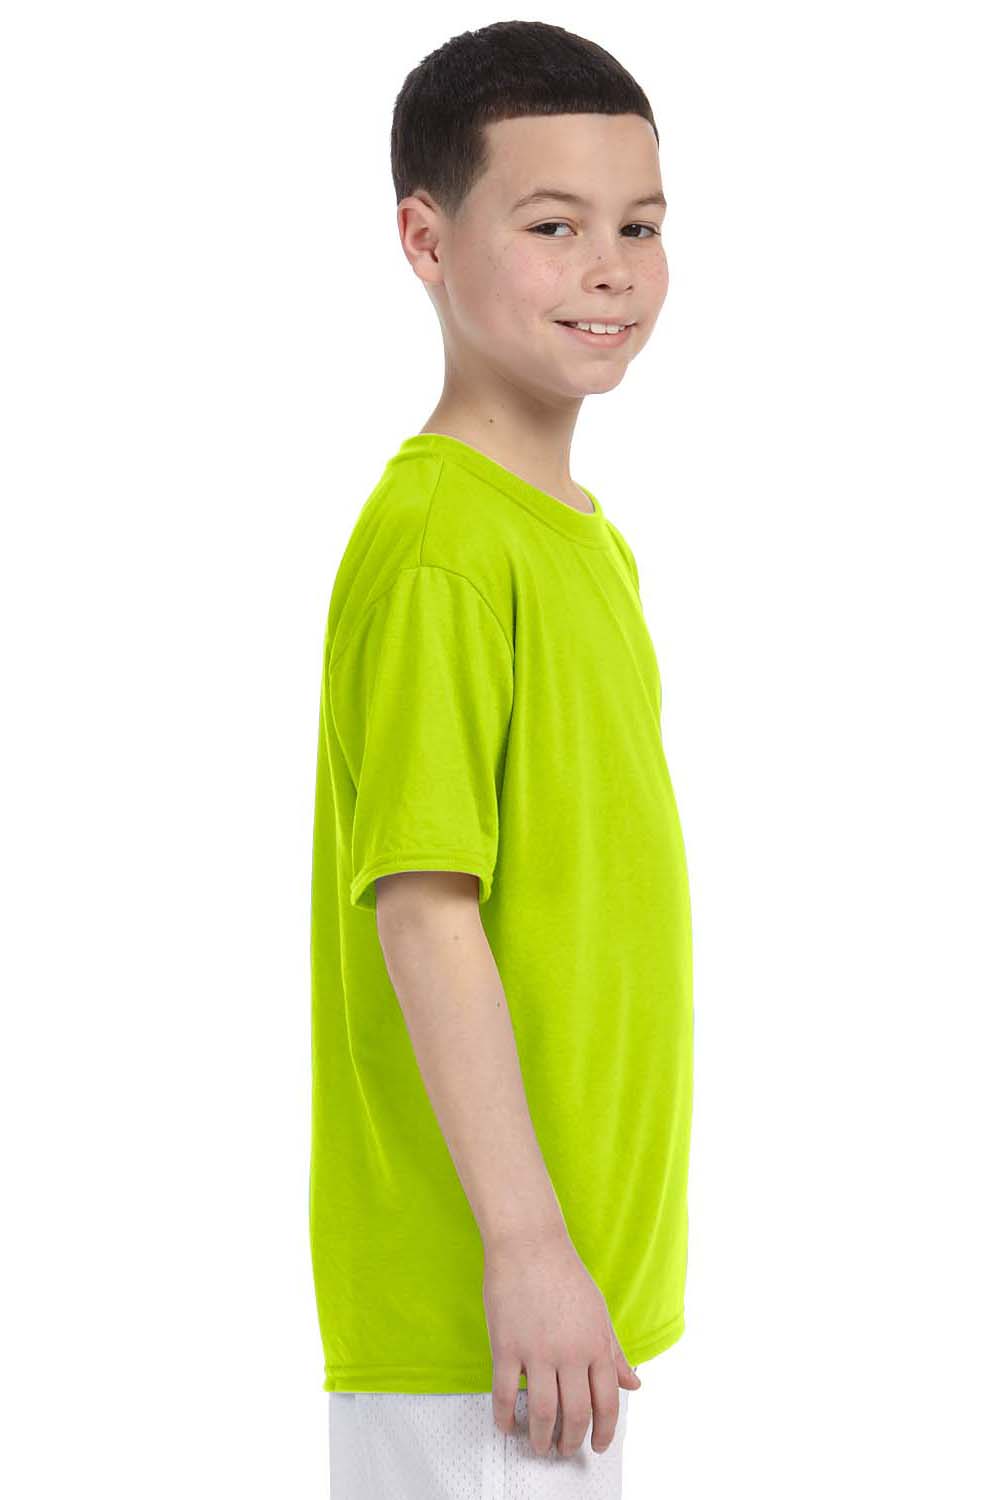 Gildan G420B Youth Performance Jersey Moisture Wicking Short Sleeve Crewneck T-Shirt Safety Green Side